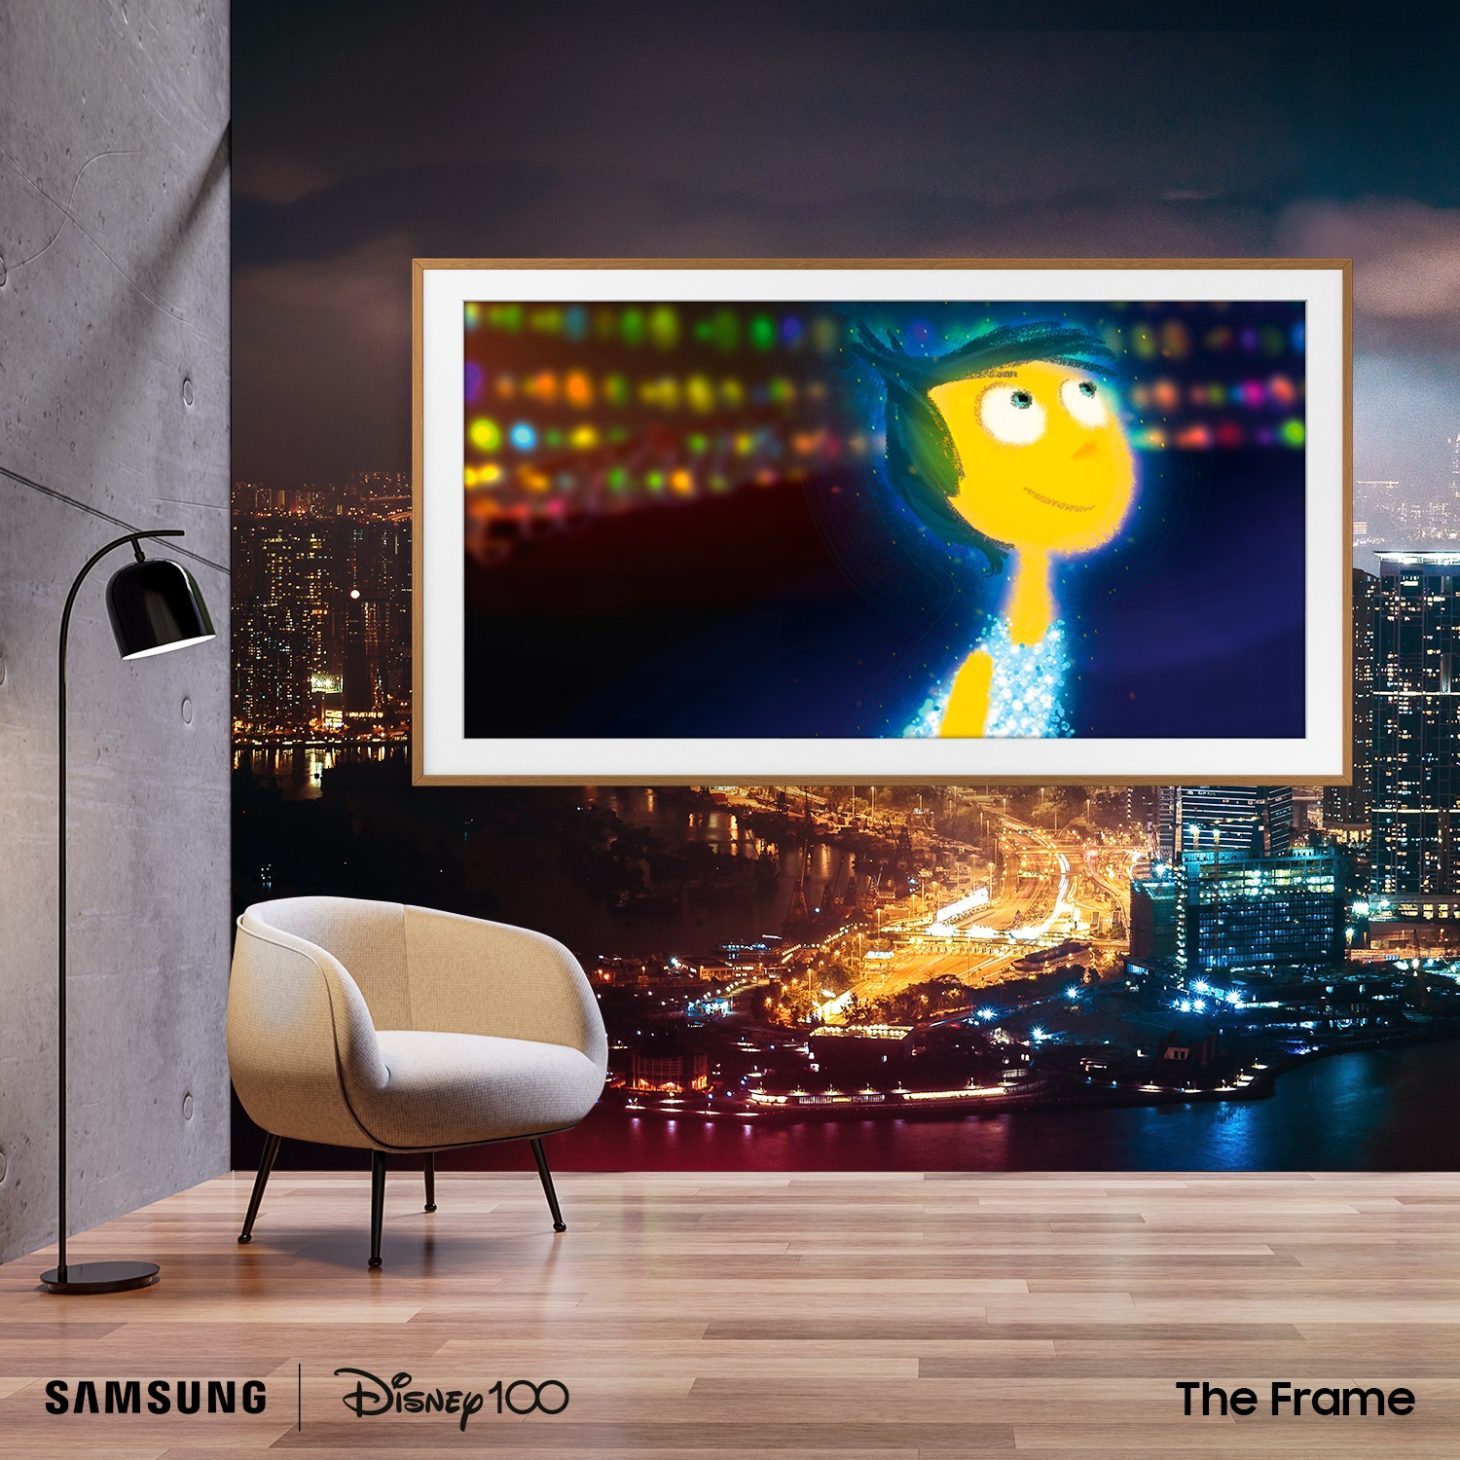 Disney 100 tuổi, Samsung ra The Frame phiên bản đặc biệt - SS AV 2023 THE FRAME FB Post 16 Hinh 2